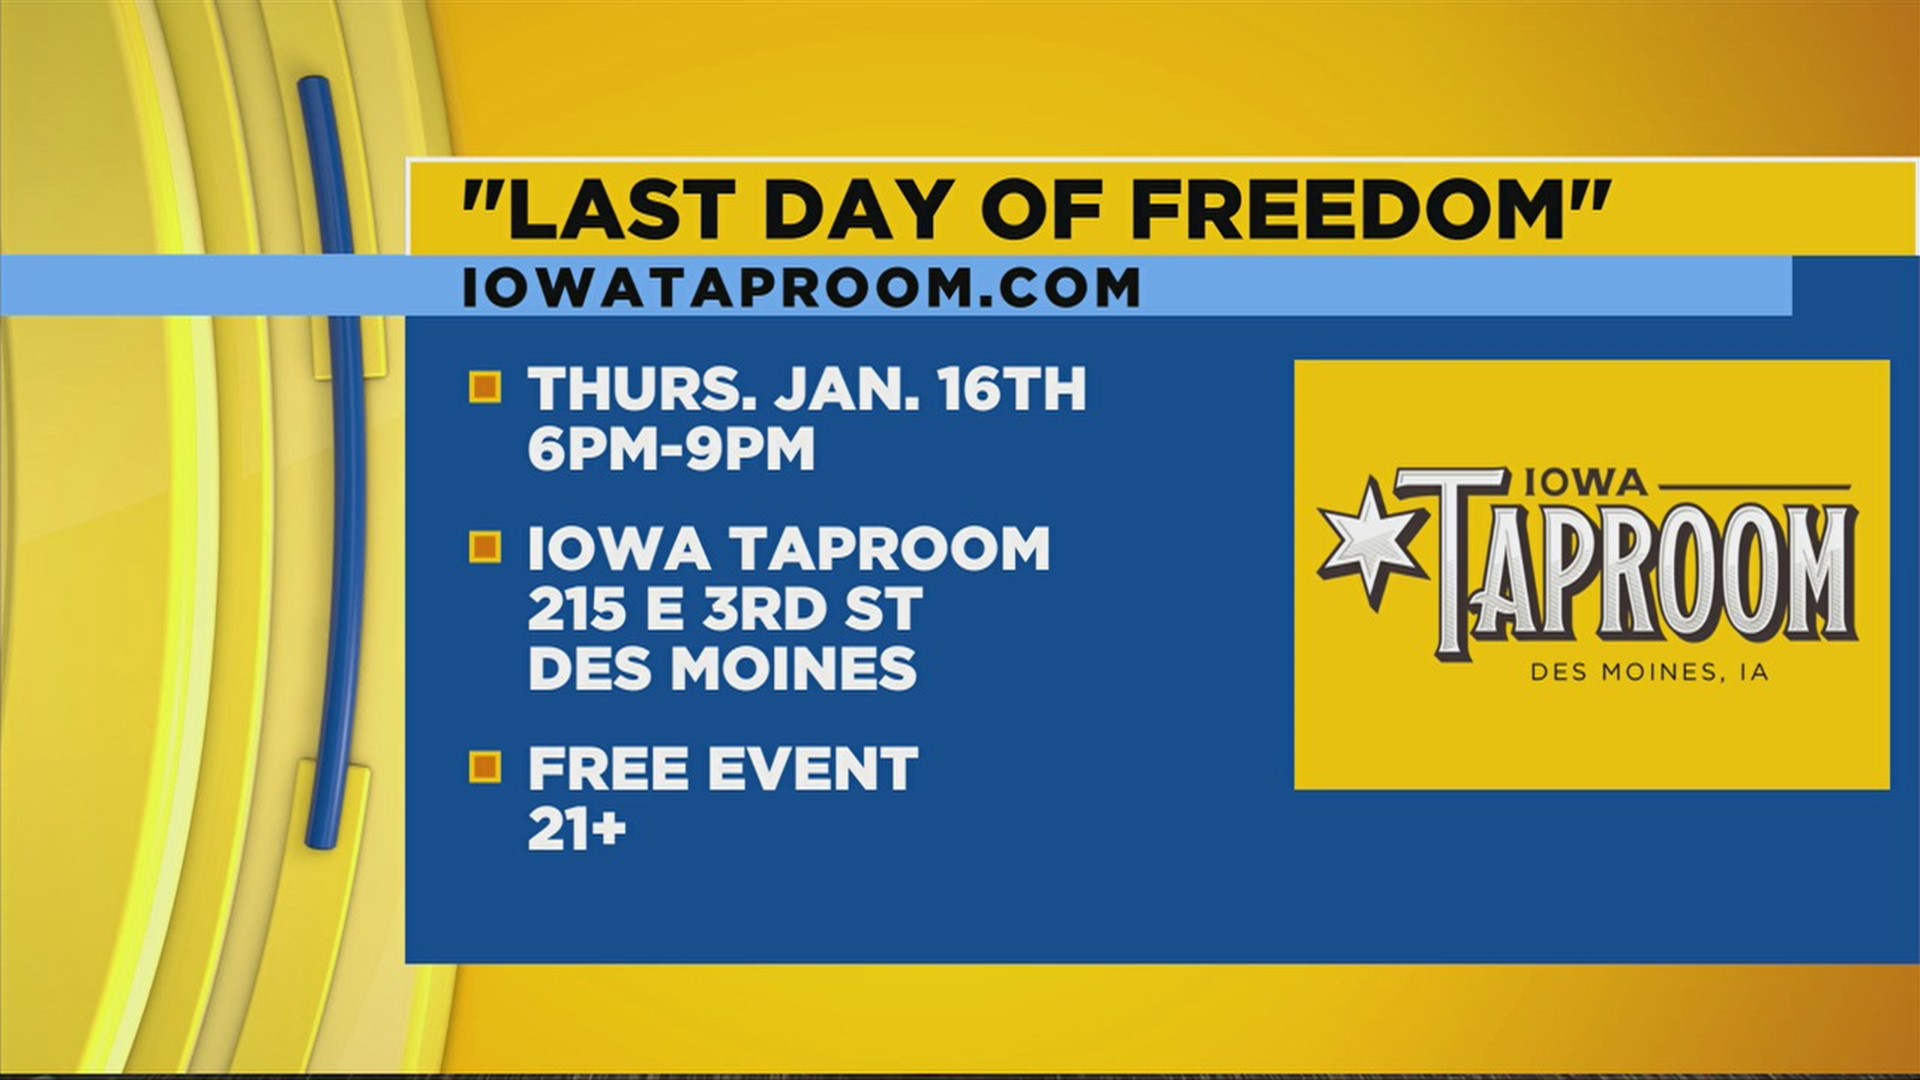 Iowa Taproom - Last Day of Freedom